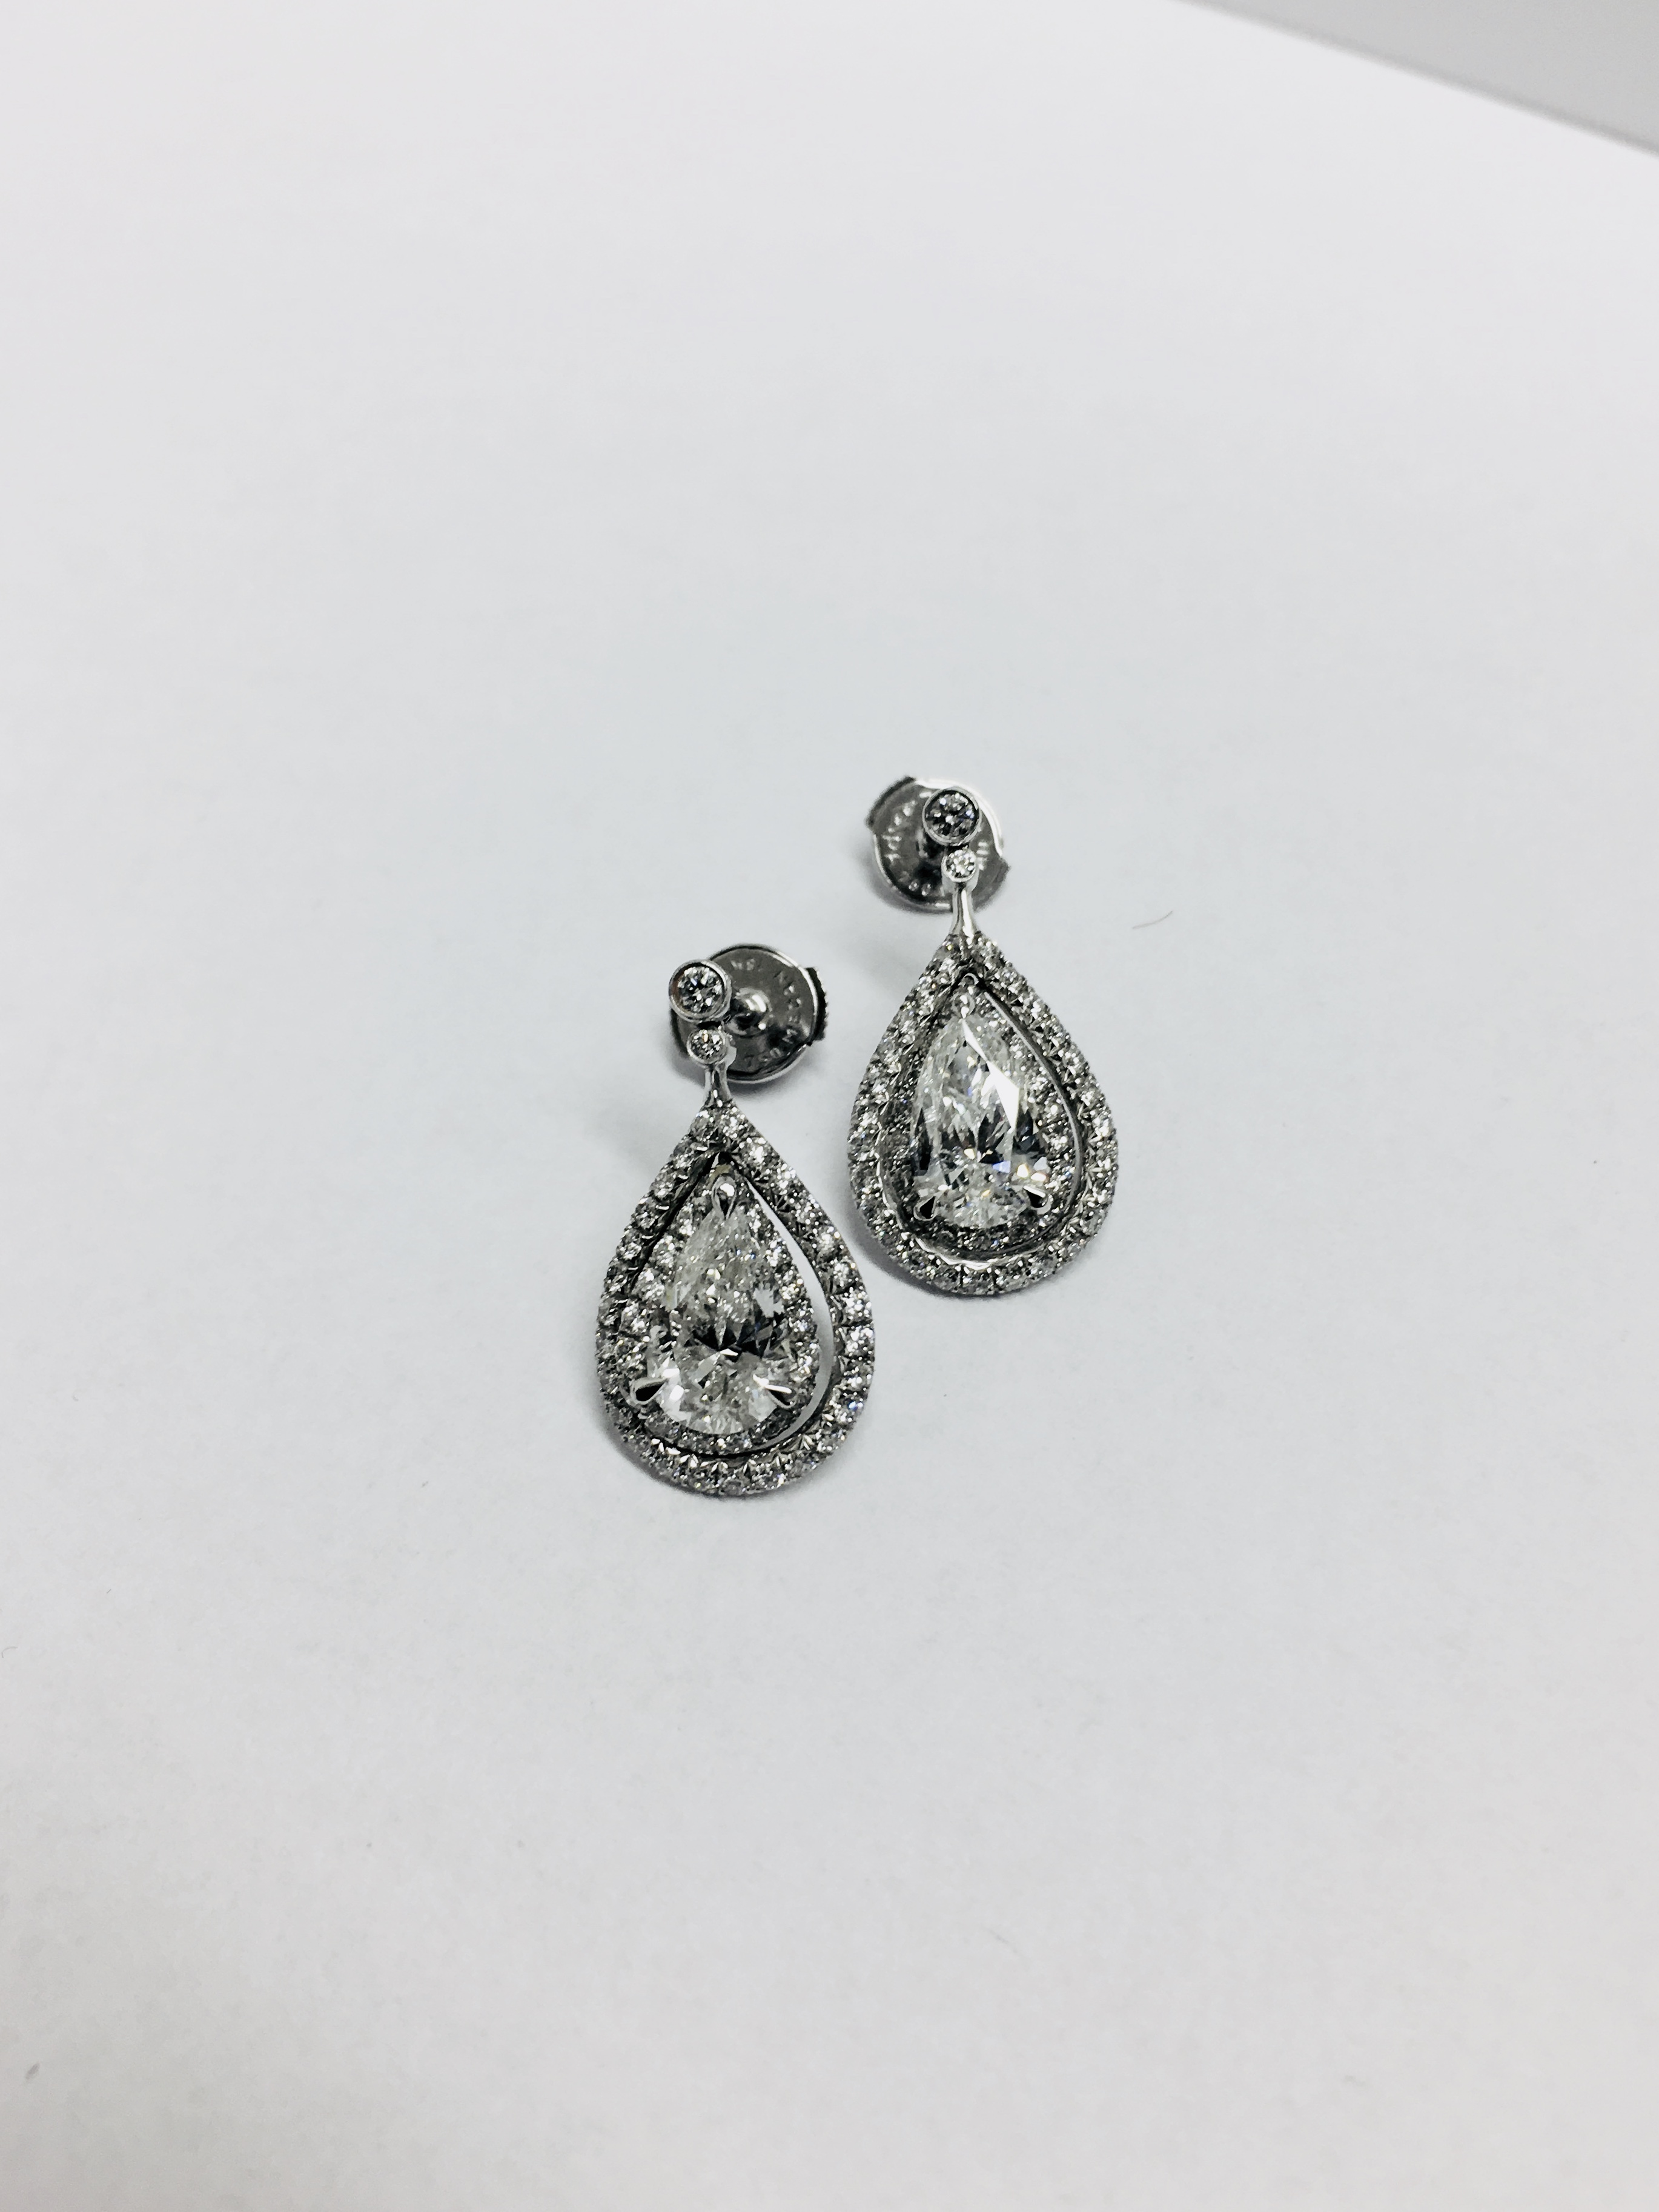 2.04ct diamond drop earrings - Image 12 of 14